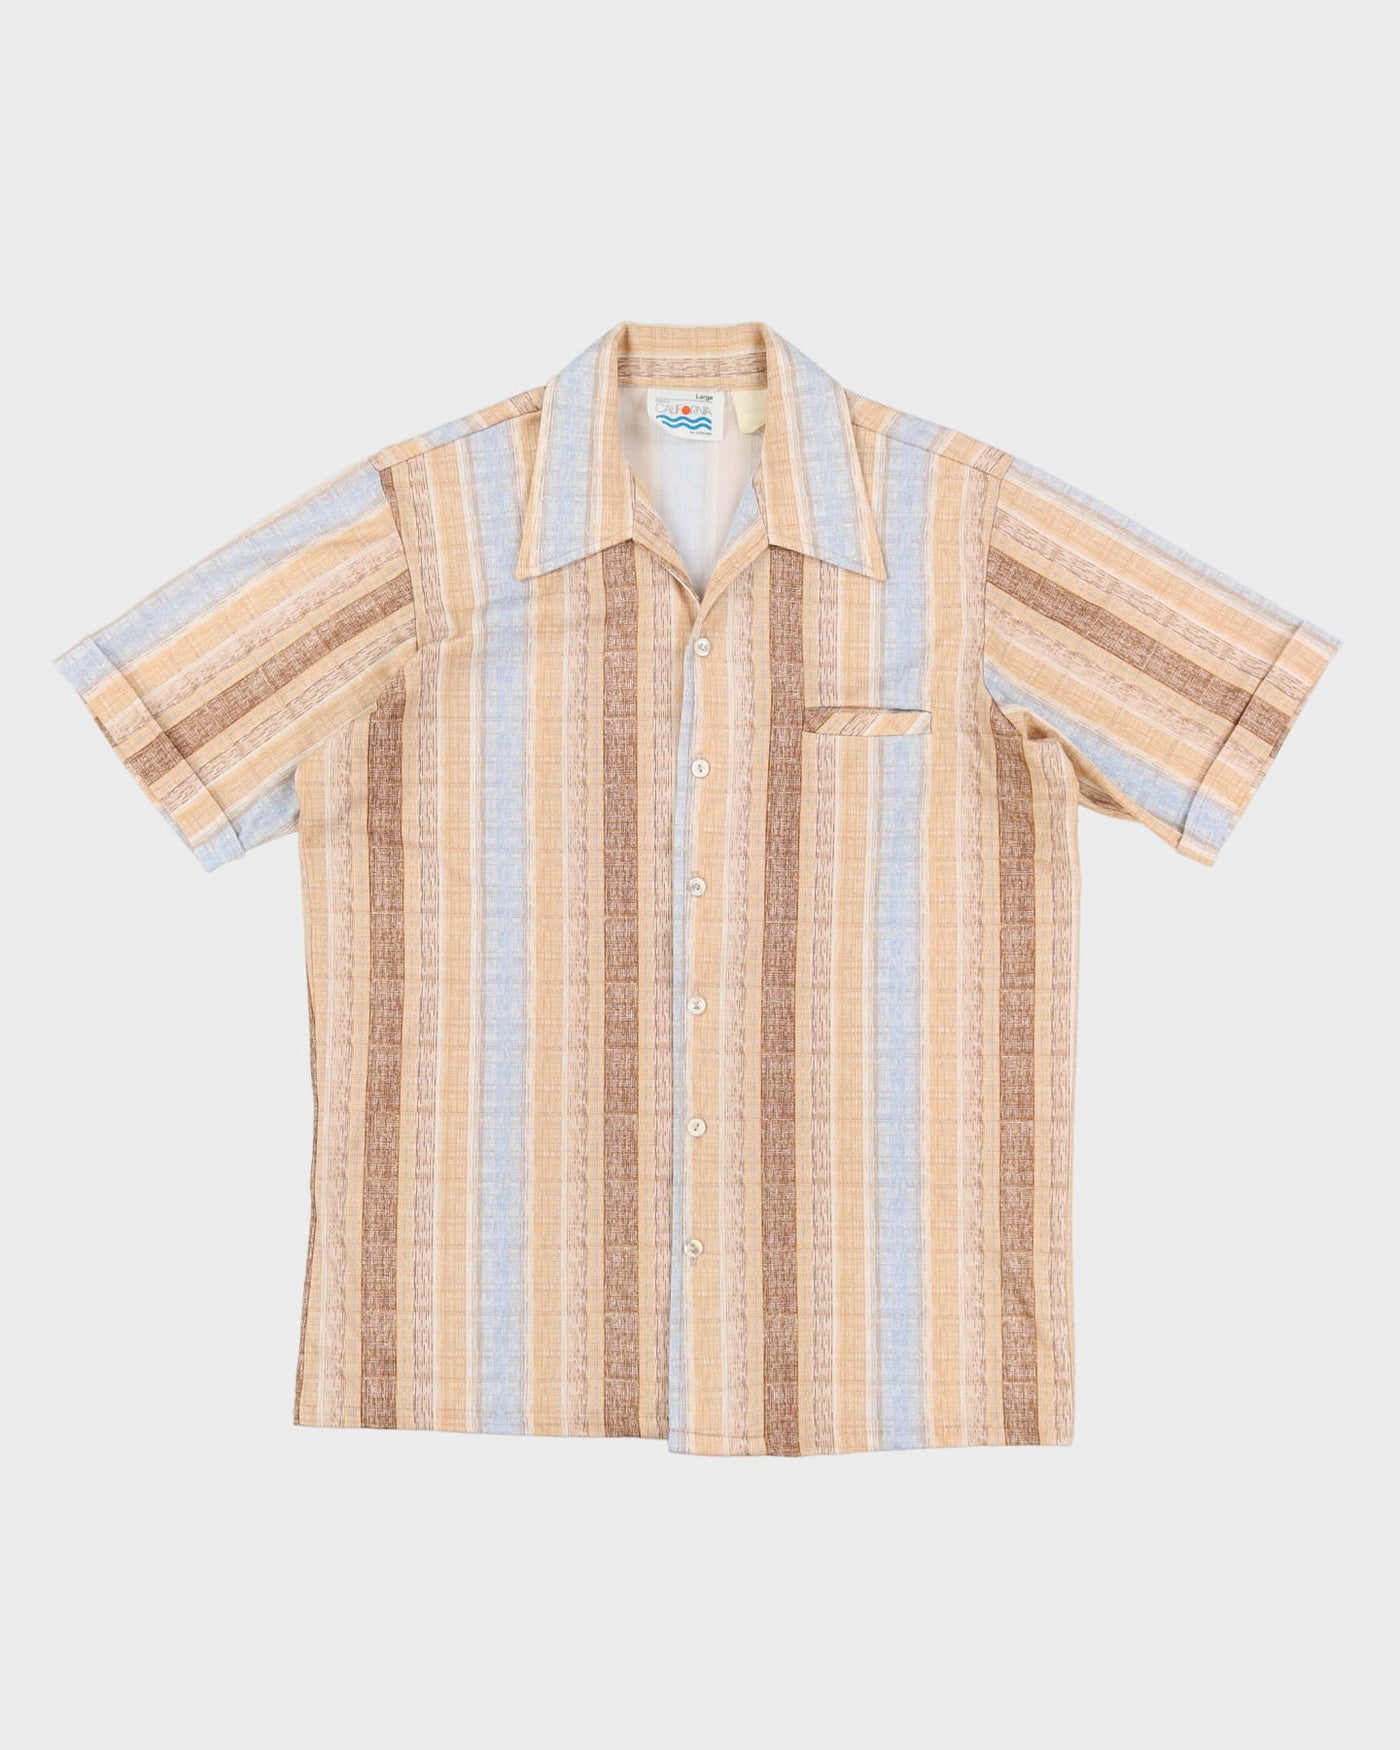 70s California Brown / Blue Striped Button Up Short-Sleeve Shirt - L